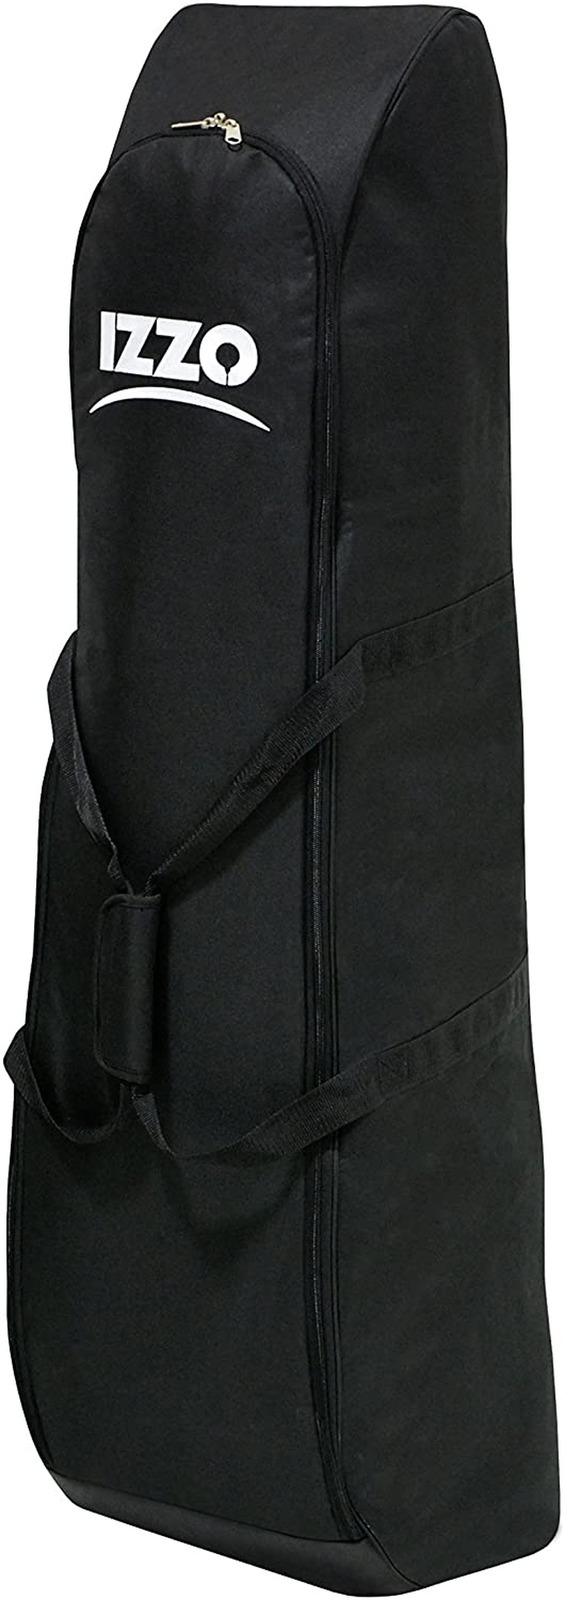 Izzo Golf Padded Golf Travel Bag,Black, 50"